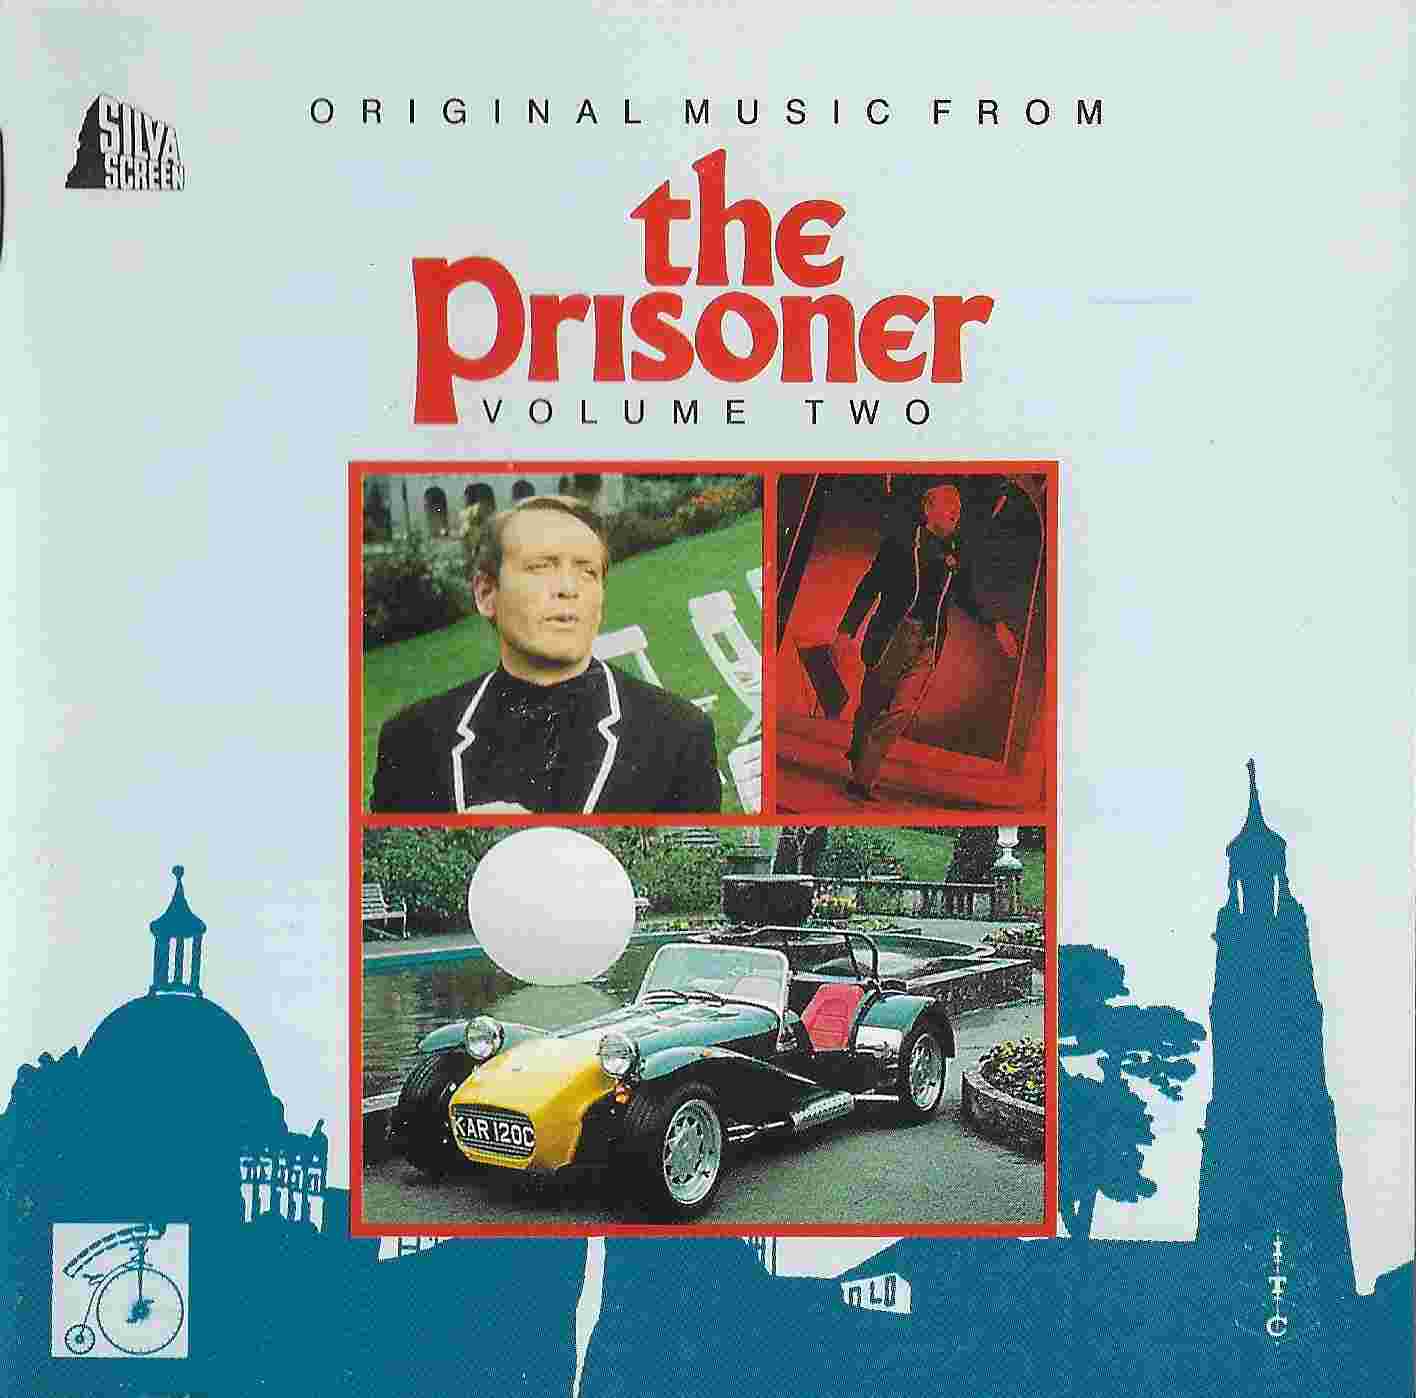 Picture of FILMCD 084 The prisoner - Volume 2 by artist Various